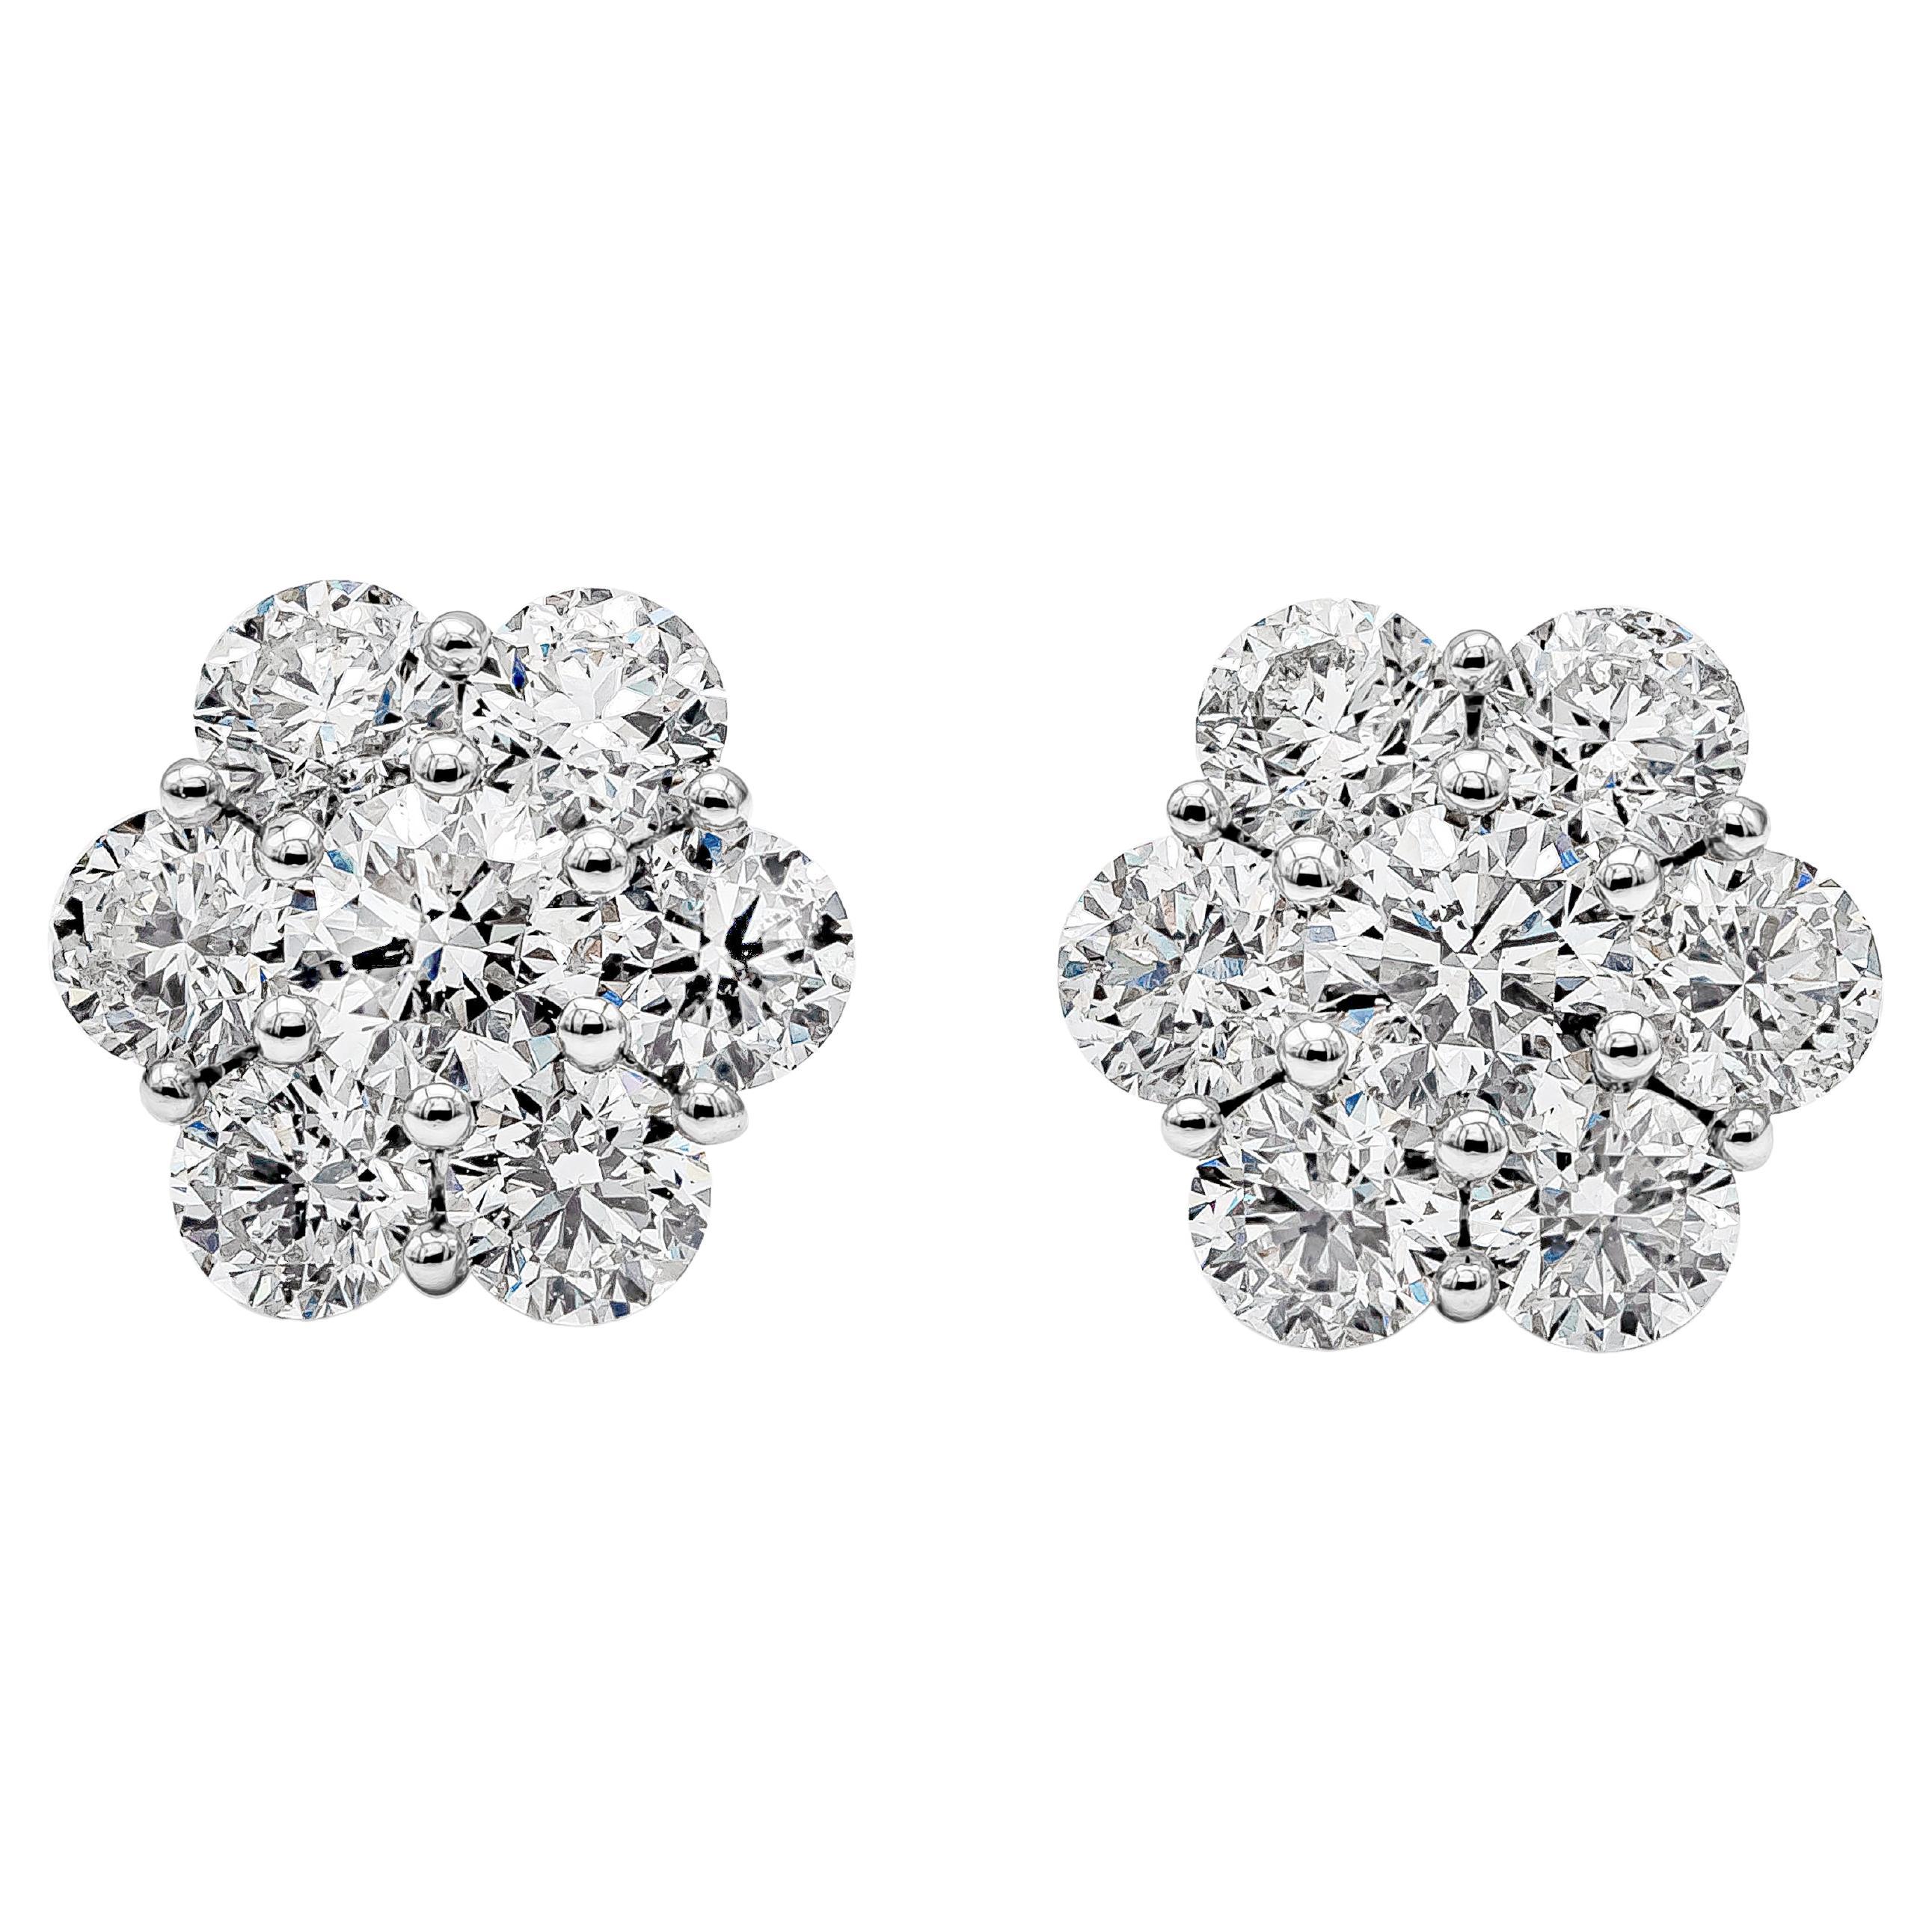 Roman Malakov 4.66 Carats Total Brilliant Round Shape Diamond Stud Earrings For Sale